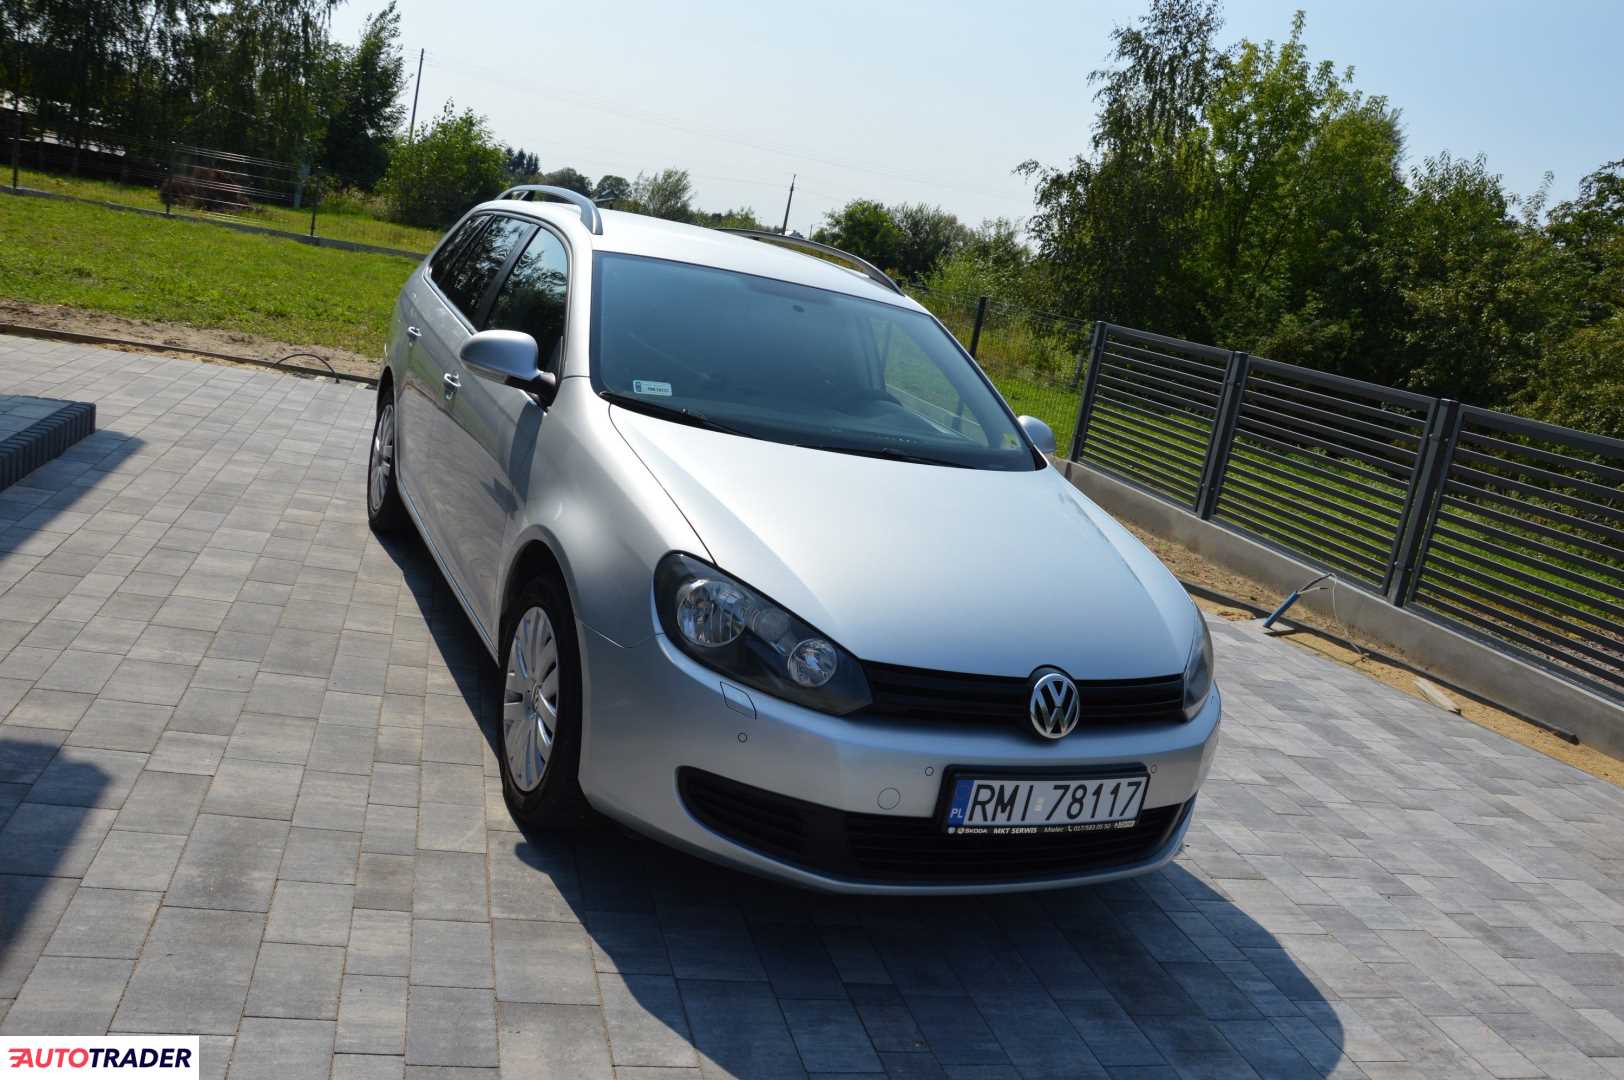 Volkswagen Golf 2013 1.6 105 KM